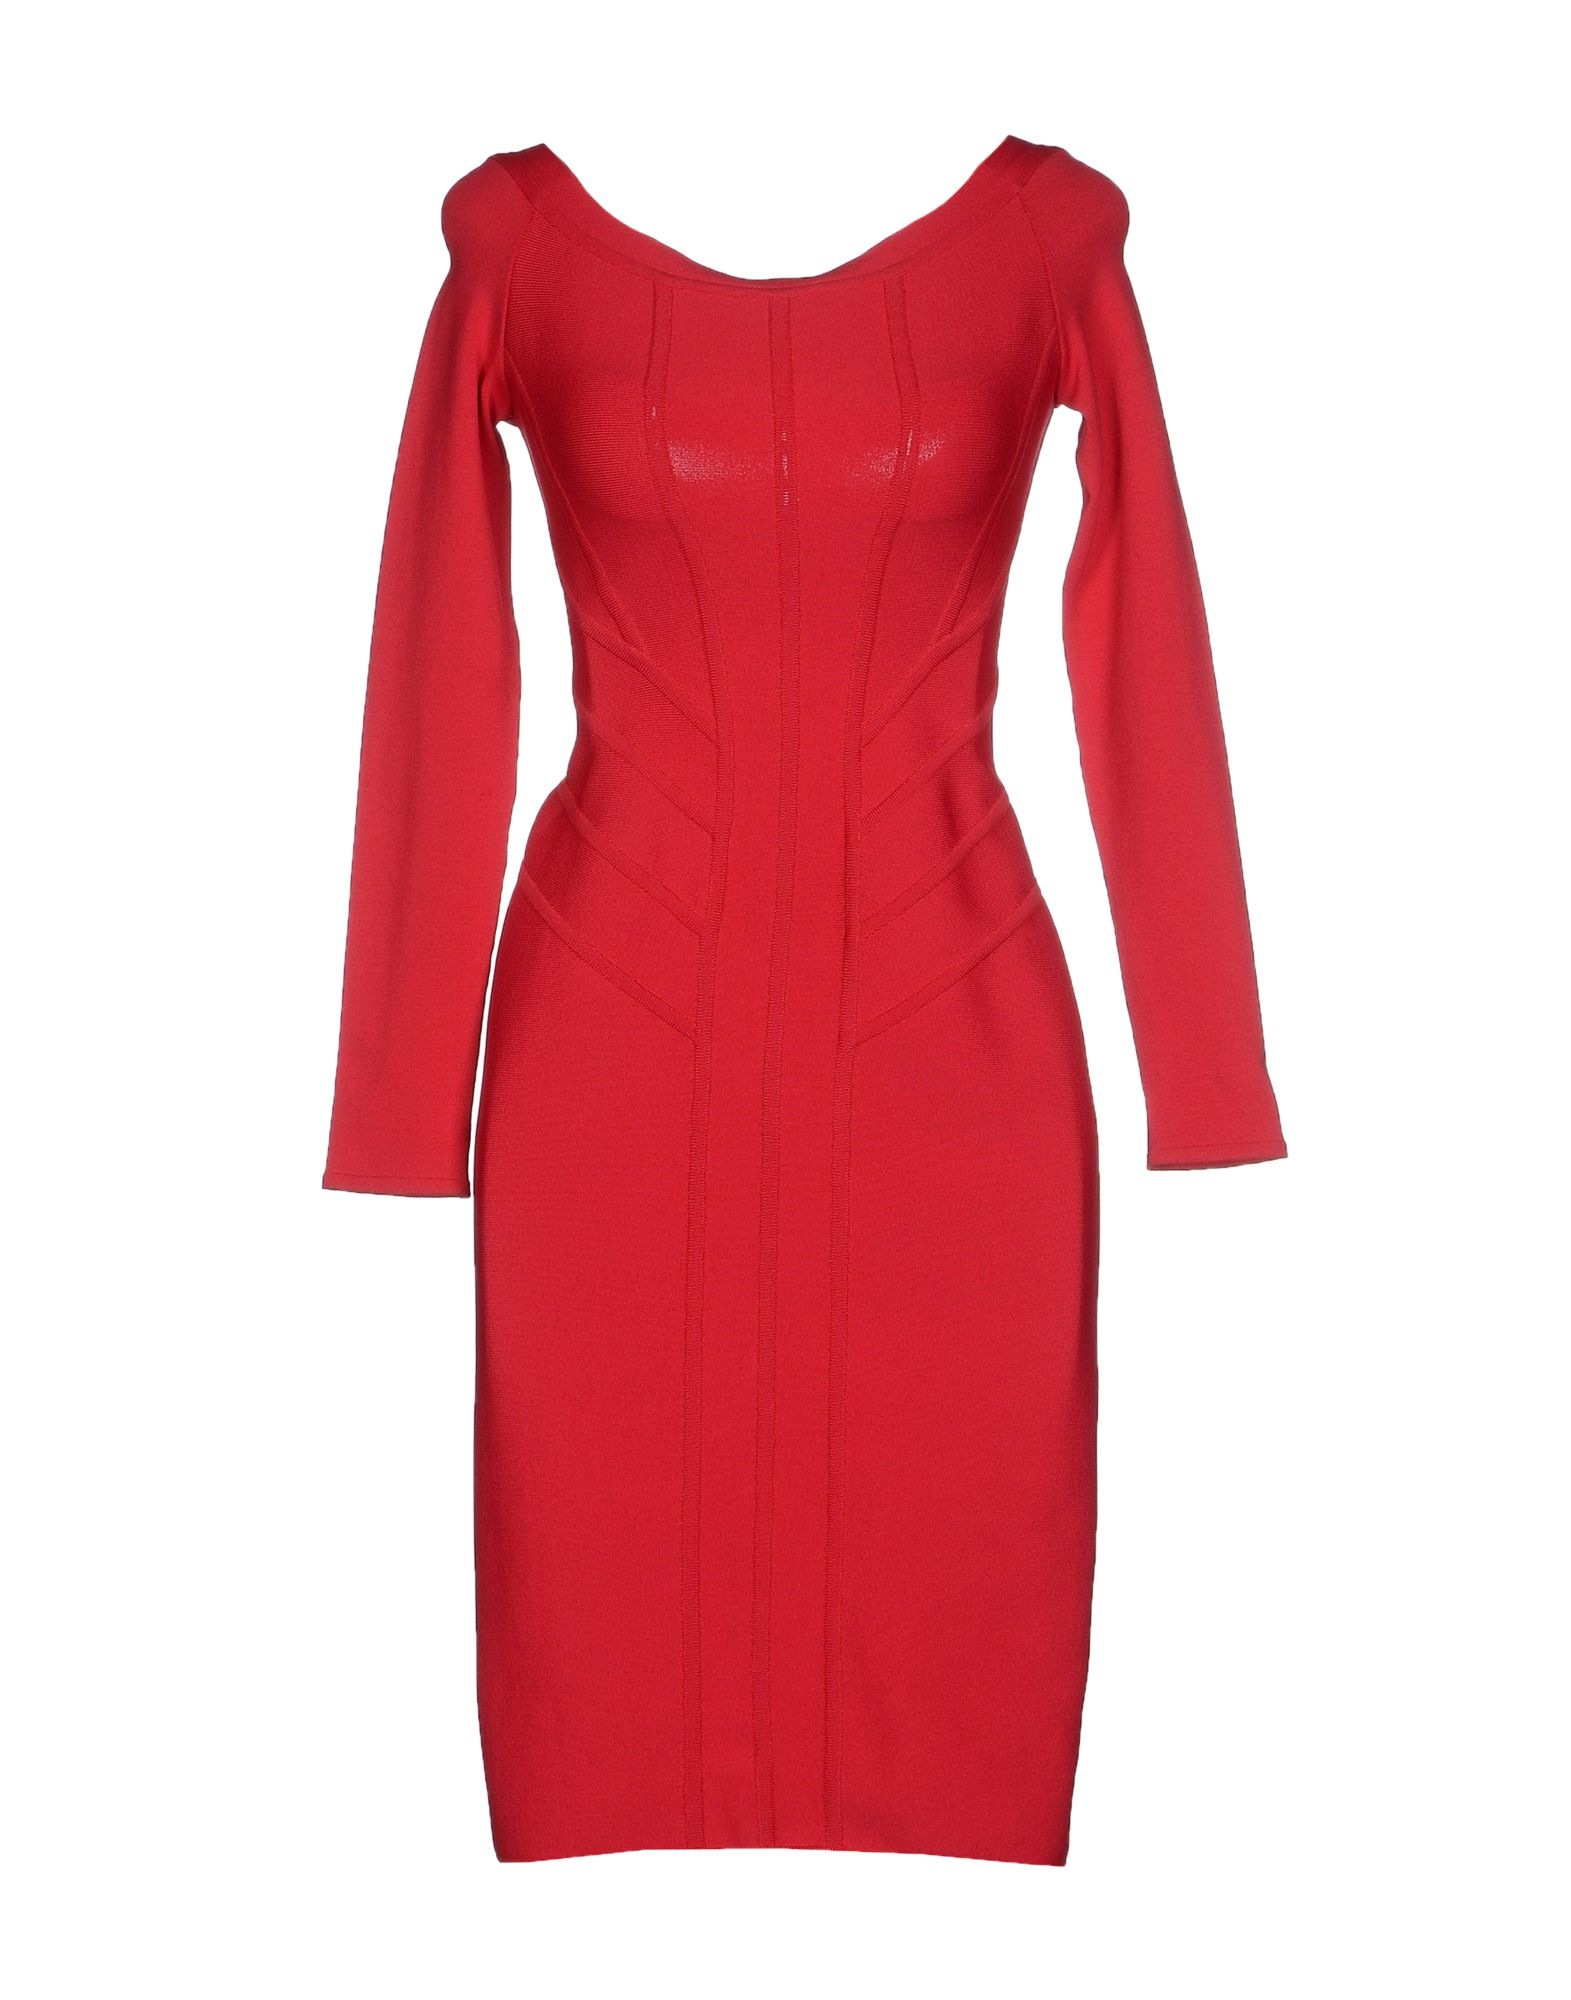 Lyst - Hervé l. leroux Short Dress in Red